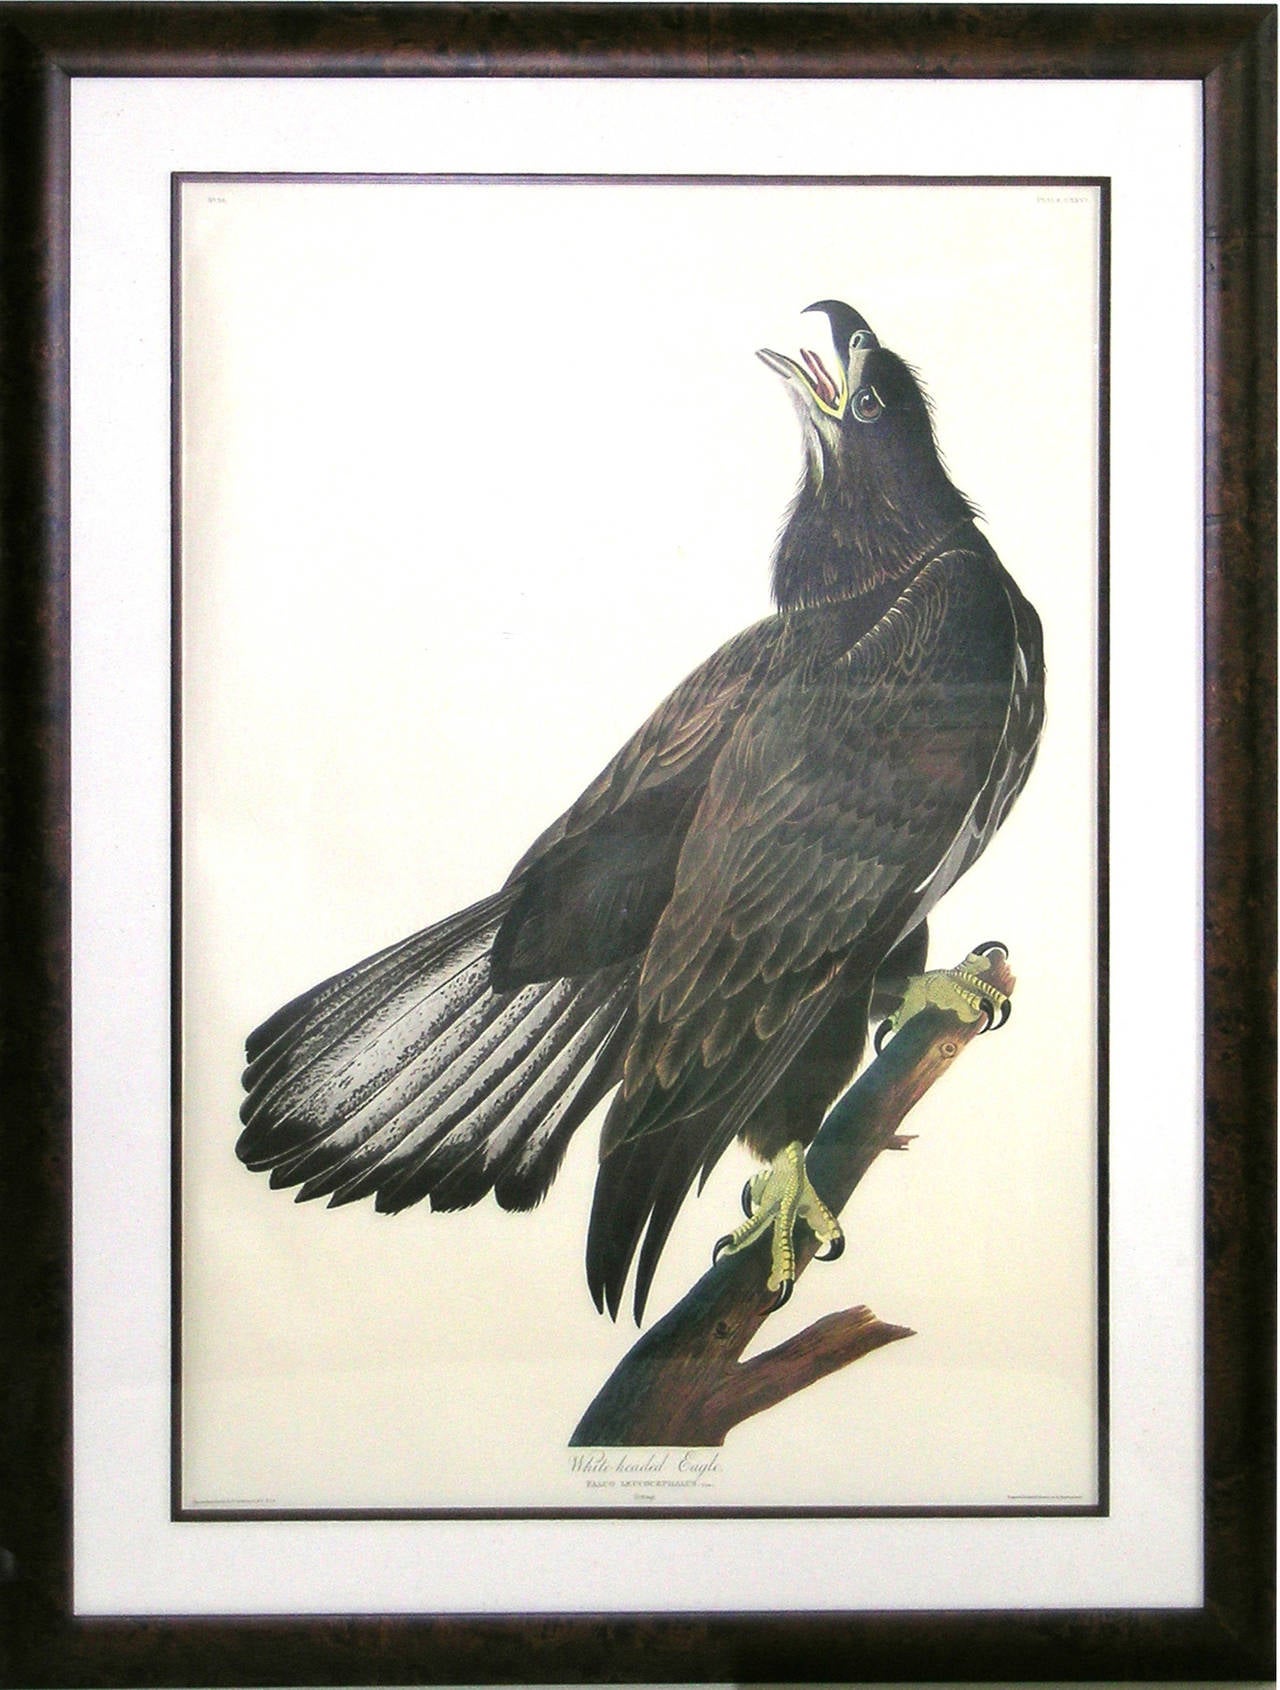 White Headed Eagle - Young (Bald Eagle) - Print by After John James Audubon